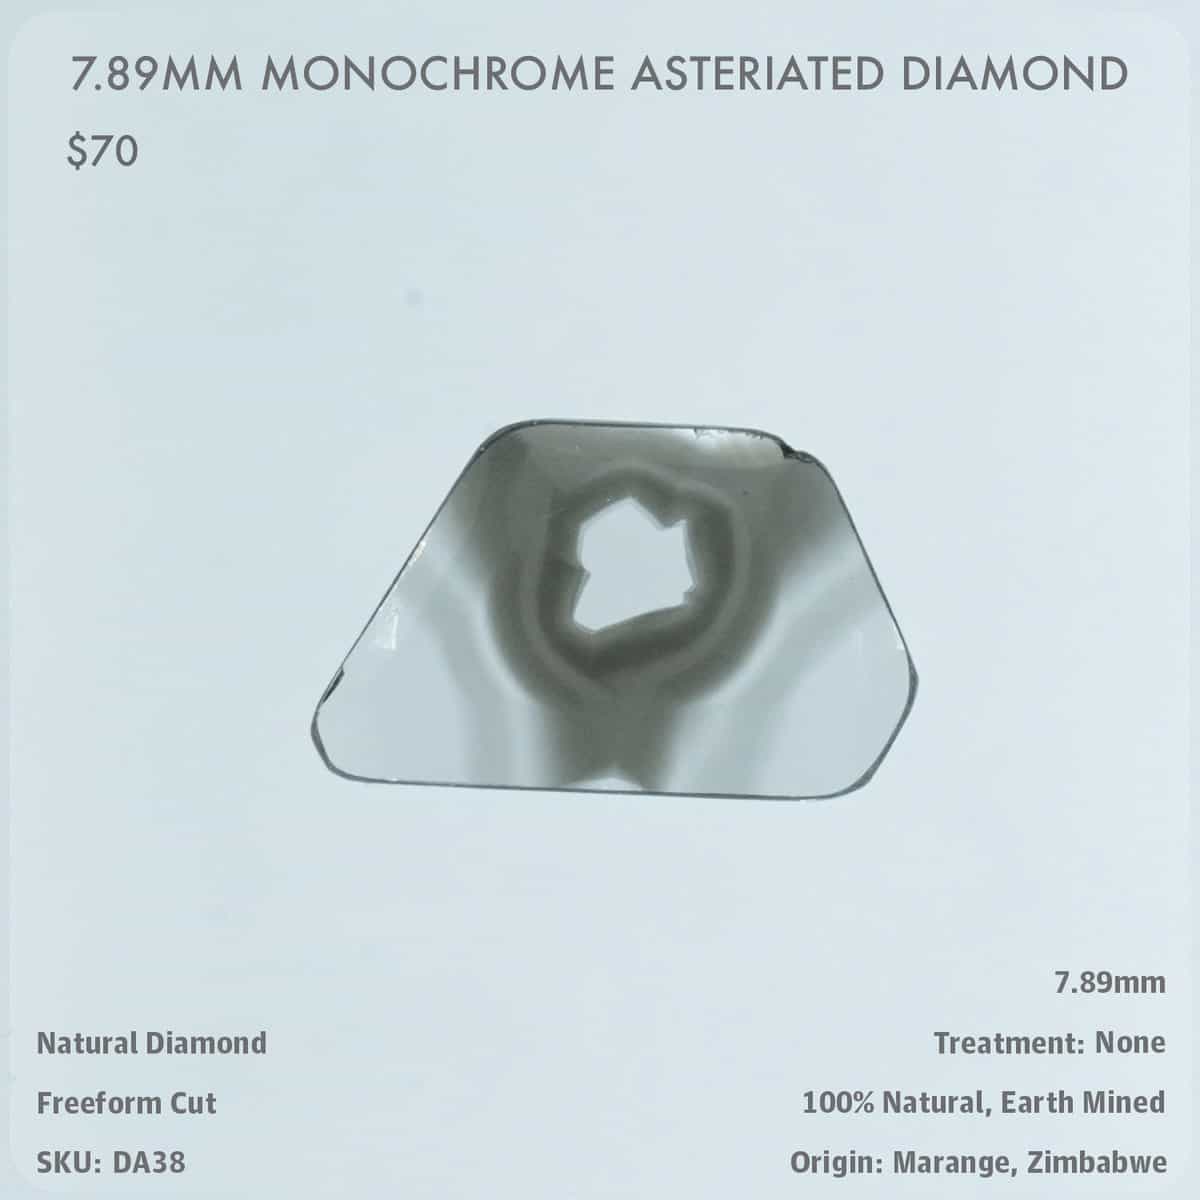 7.89mm Monochrome Asteriated Diamond